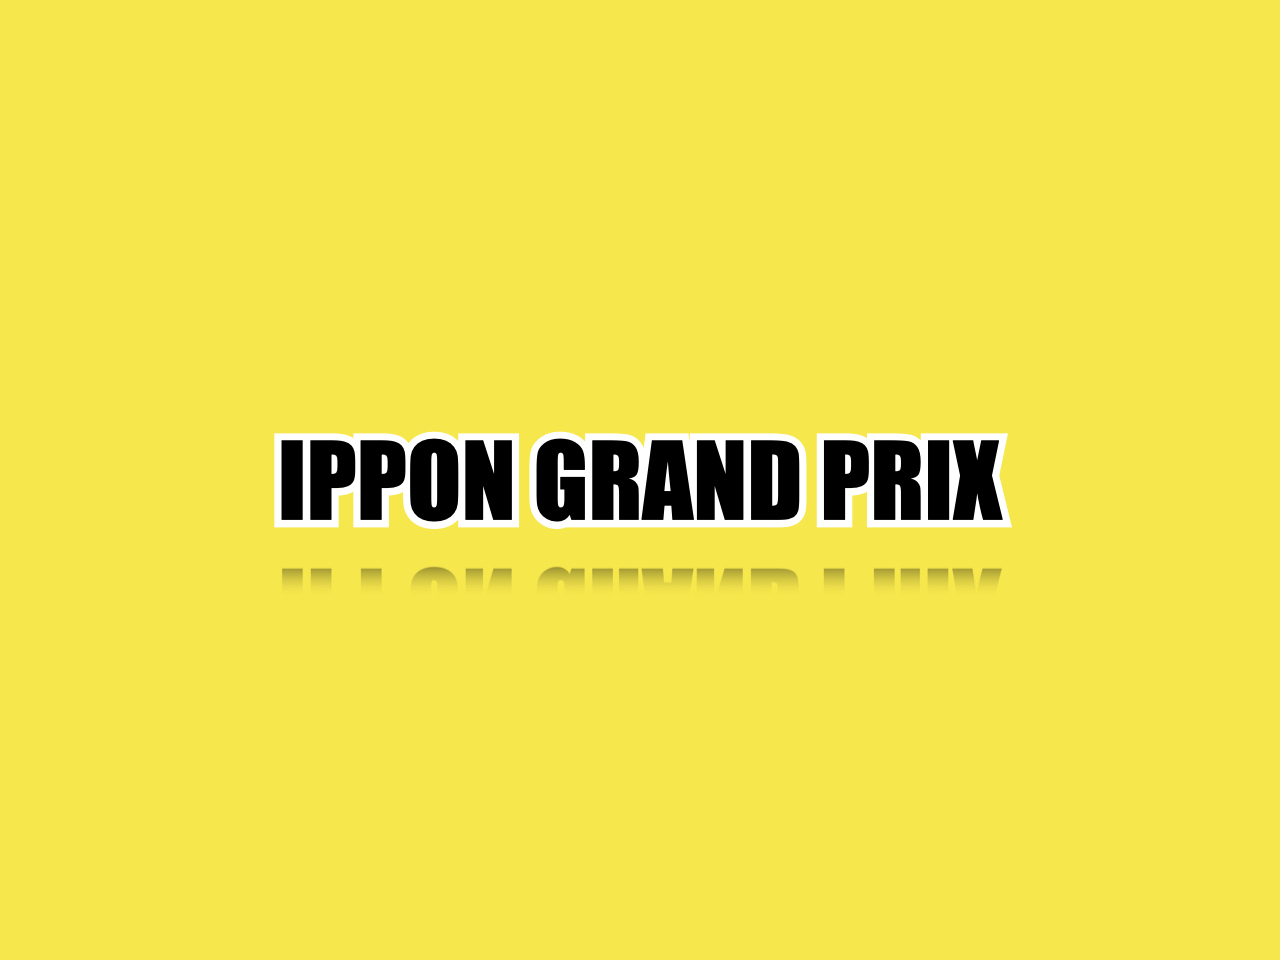 IPPONグランプリ歴代優勝者